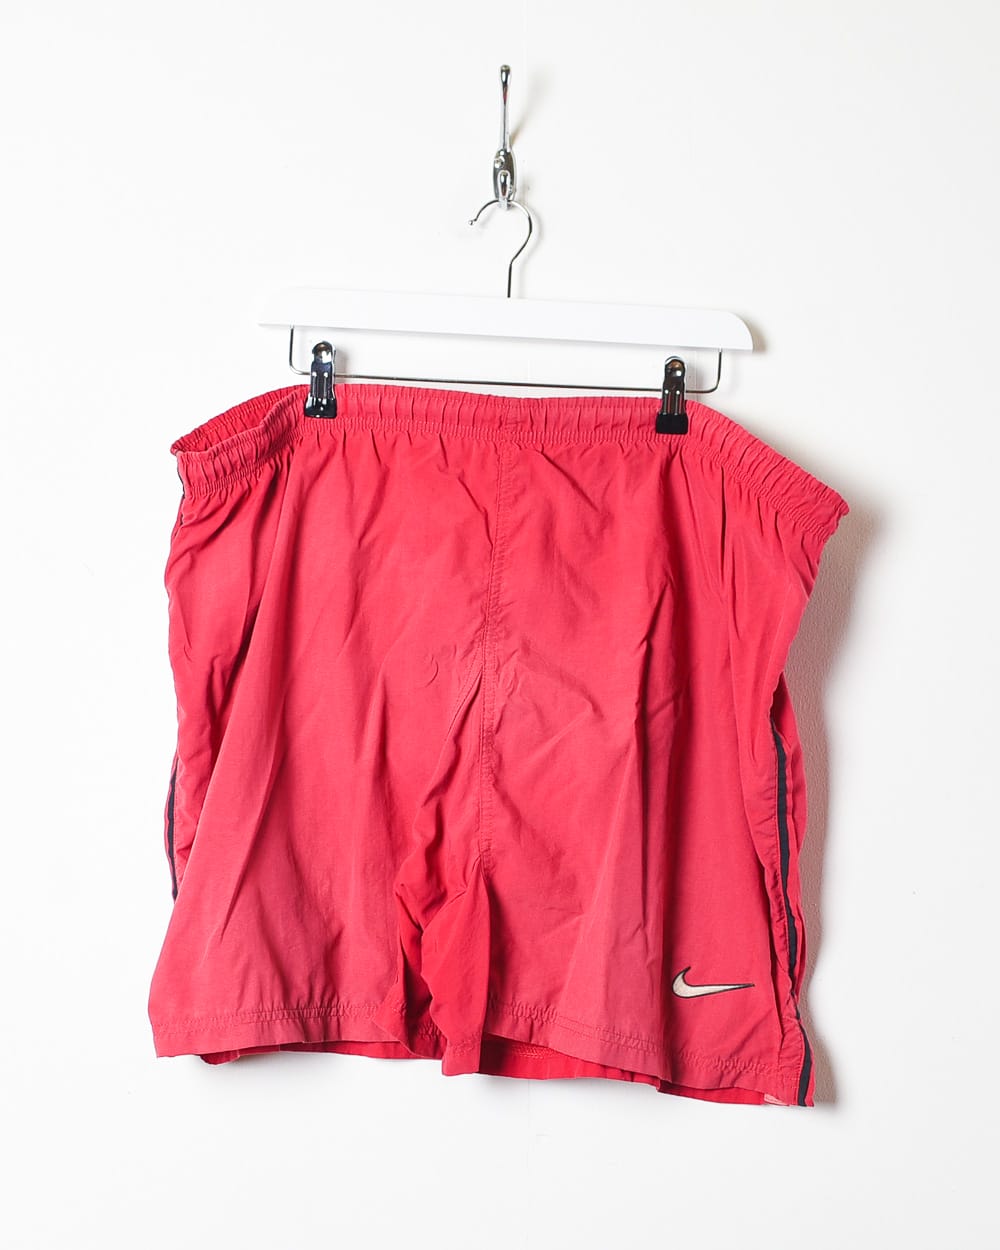 Red Nike Shorts - X-Large